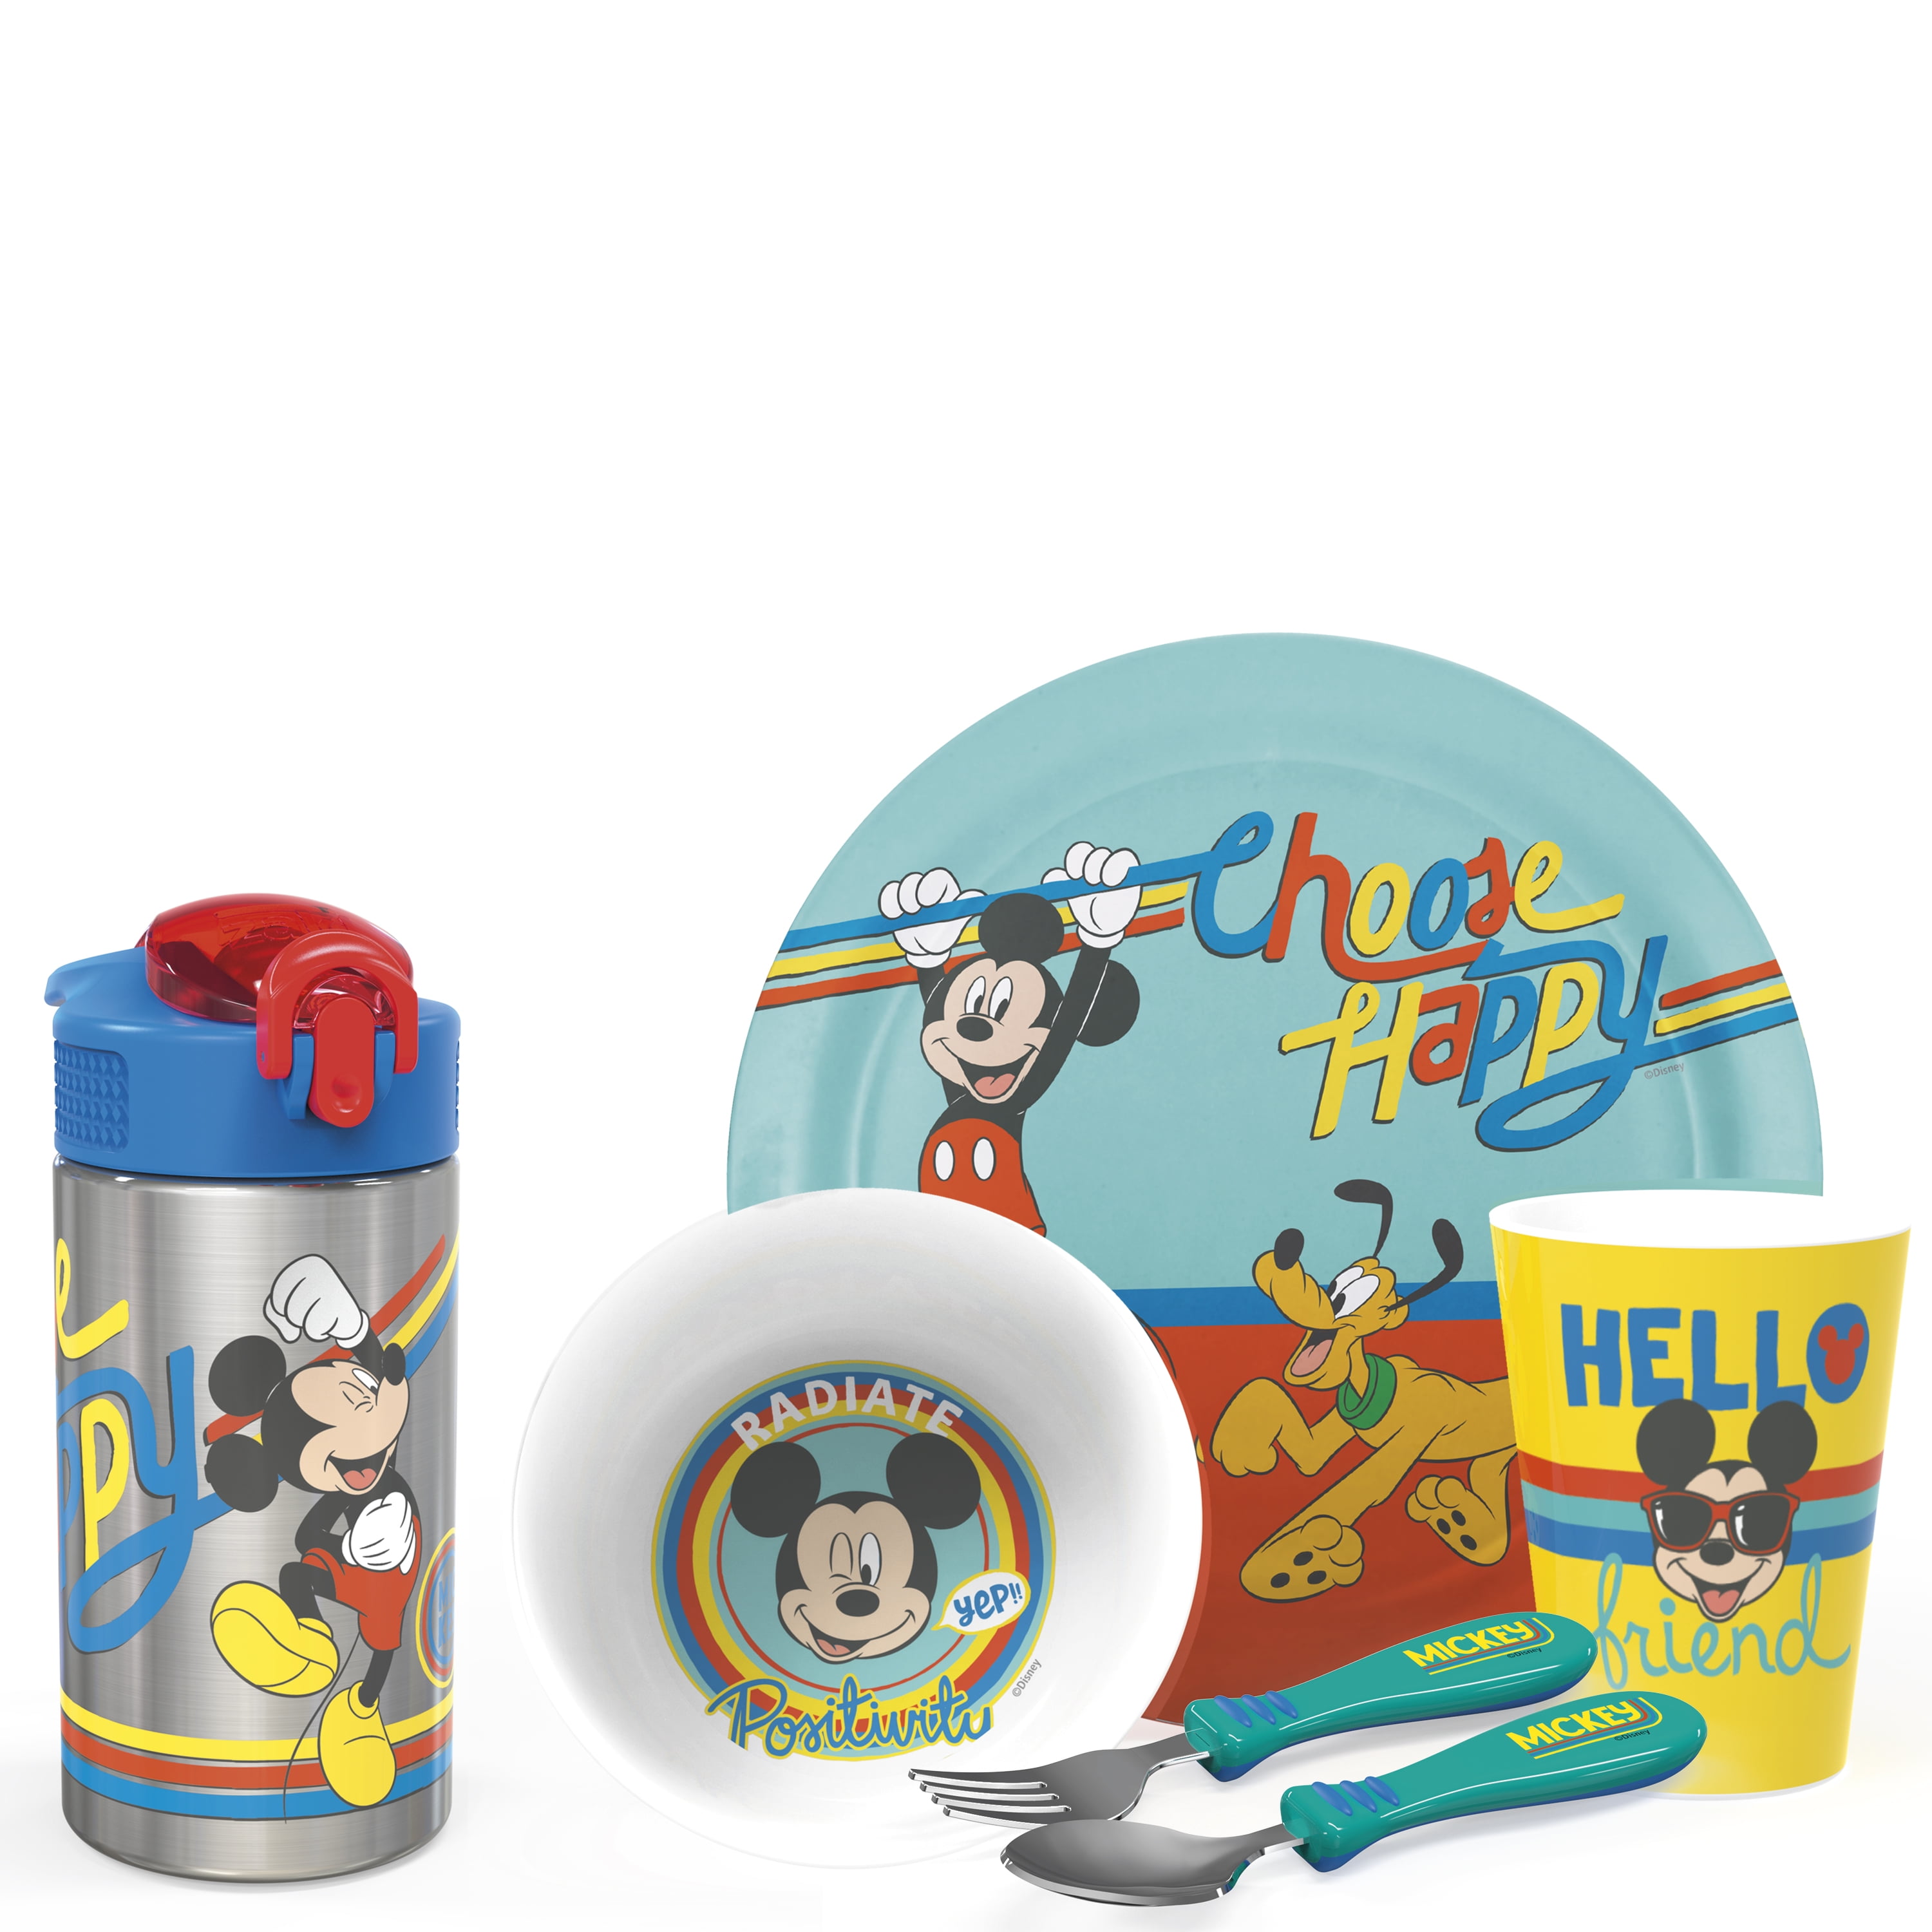 Bowl Disney / Character Ceramic 3 Piece Dinner Set Mug PJ Masks Plate 